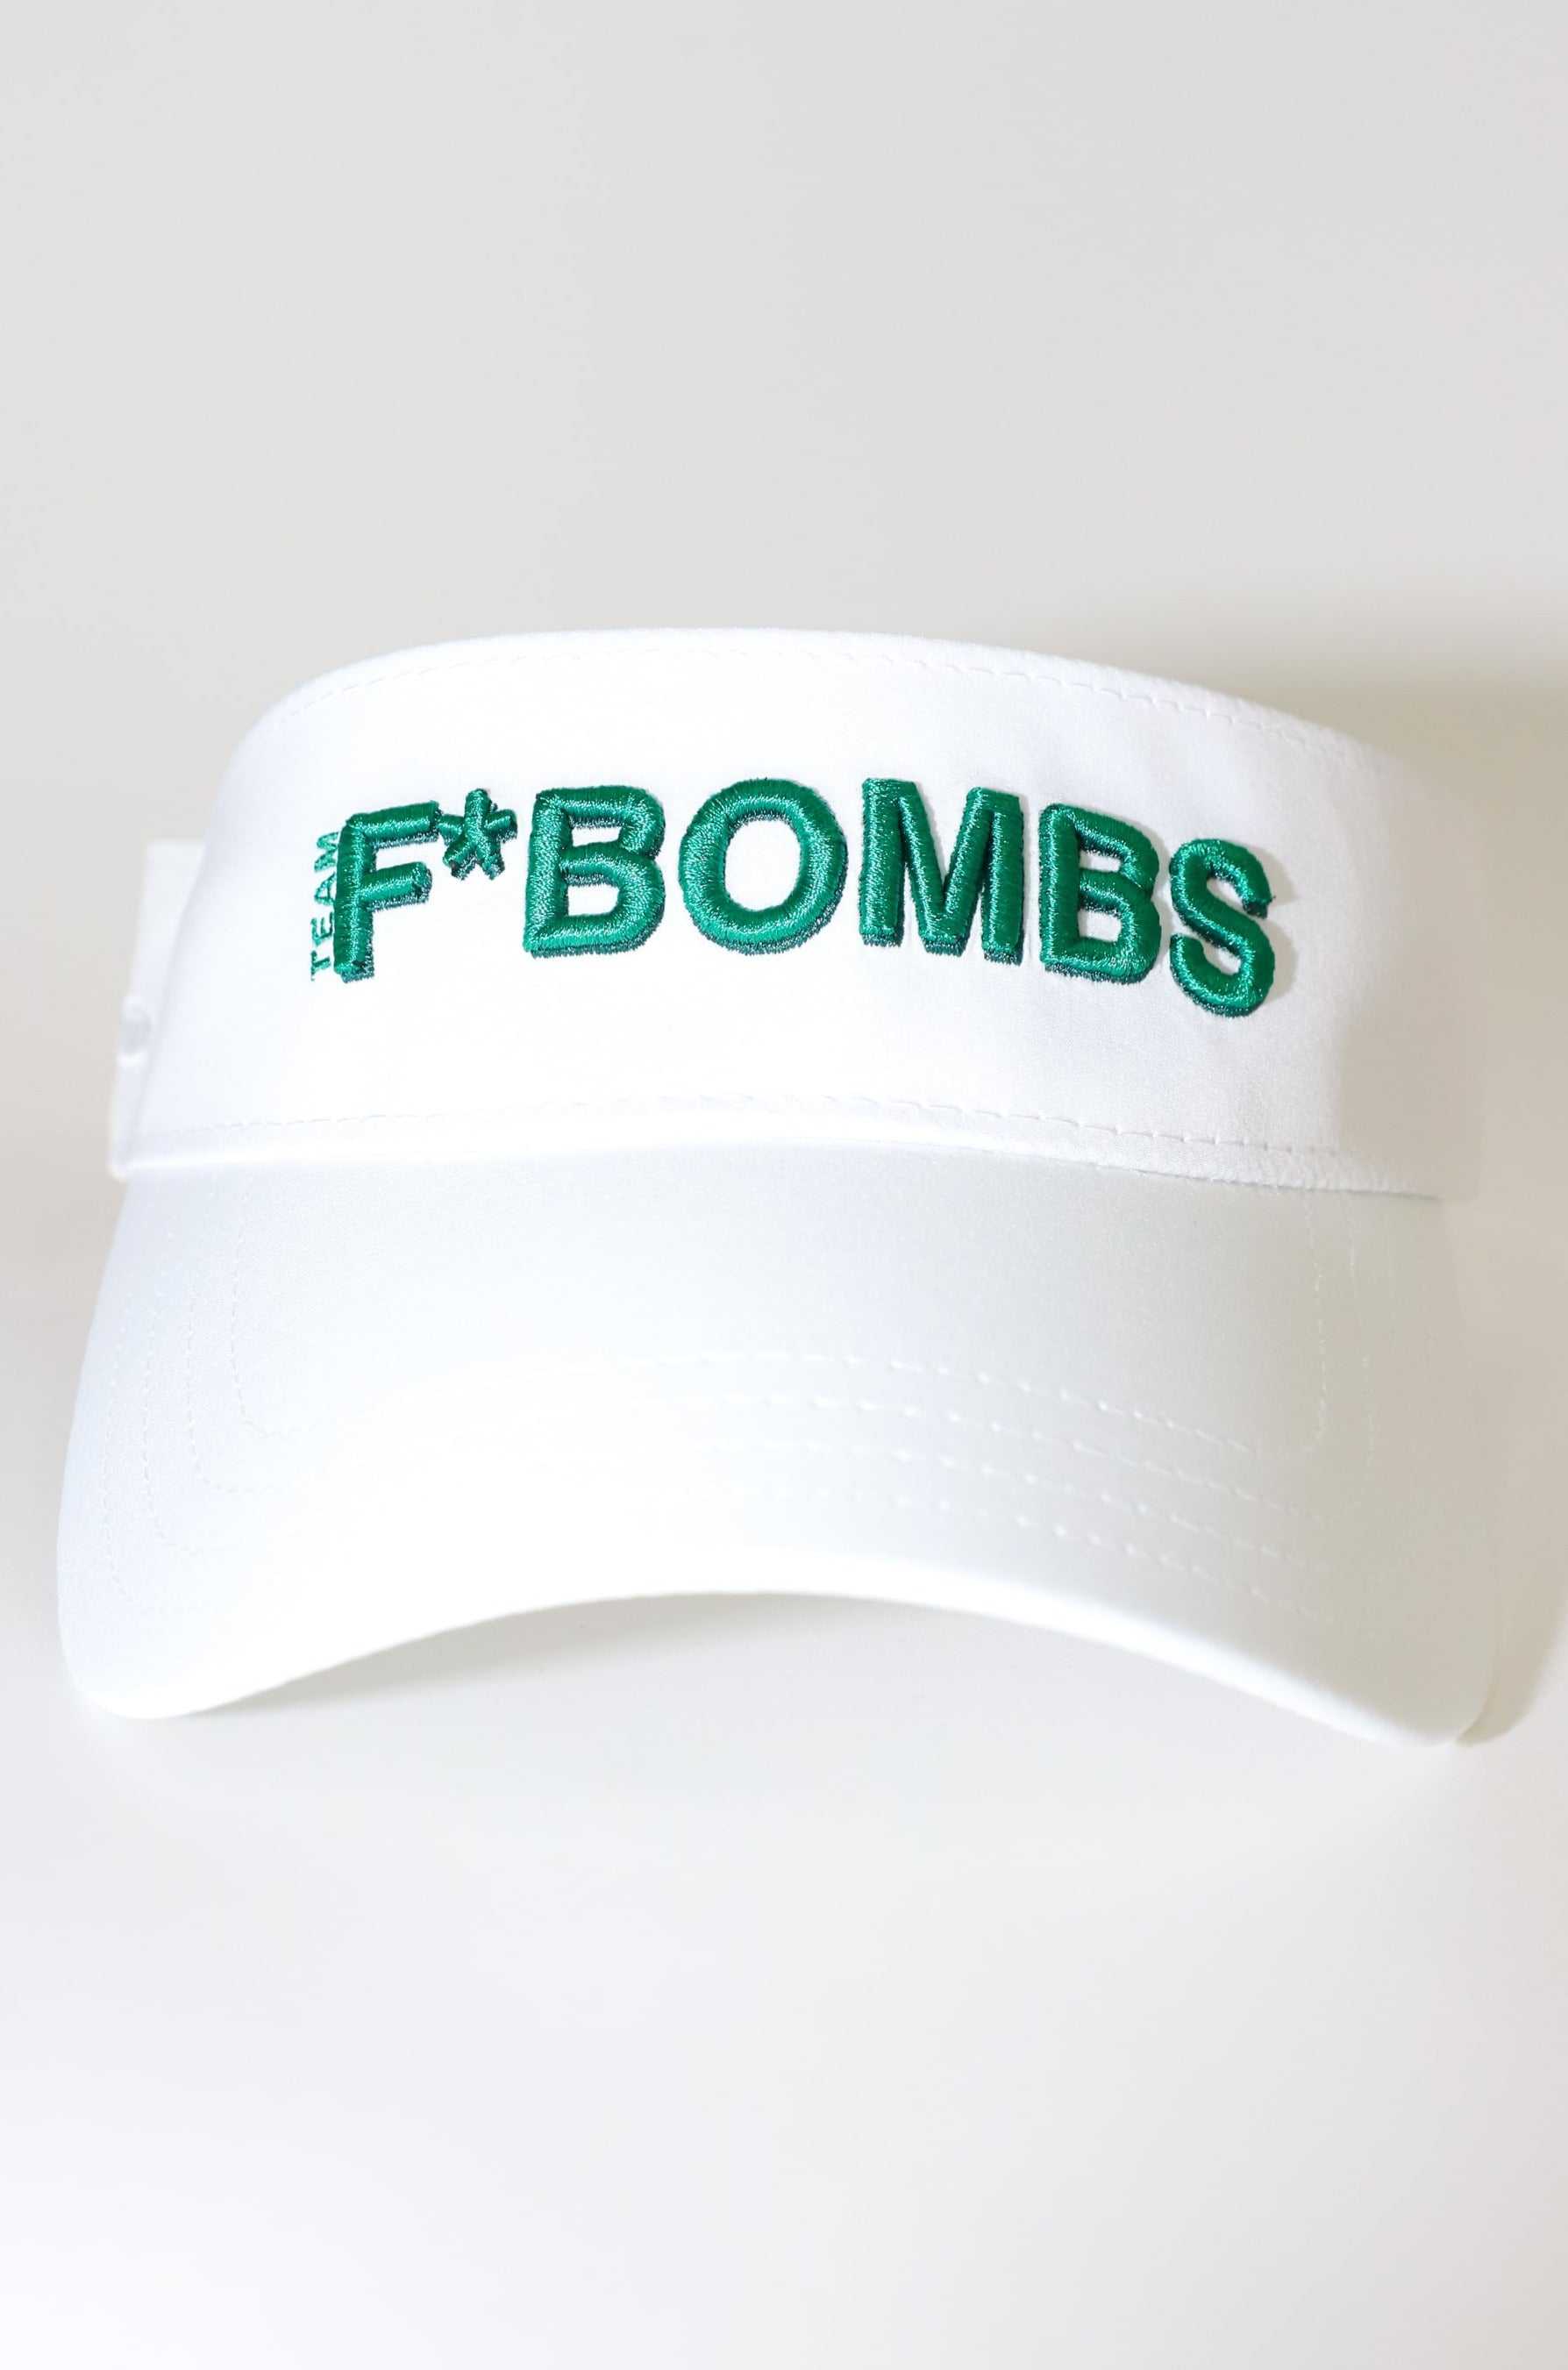 Team F*Bombs Visor